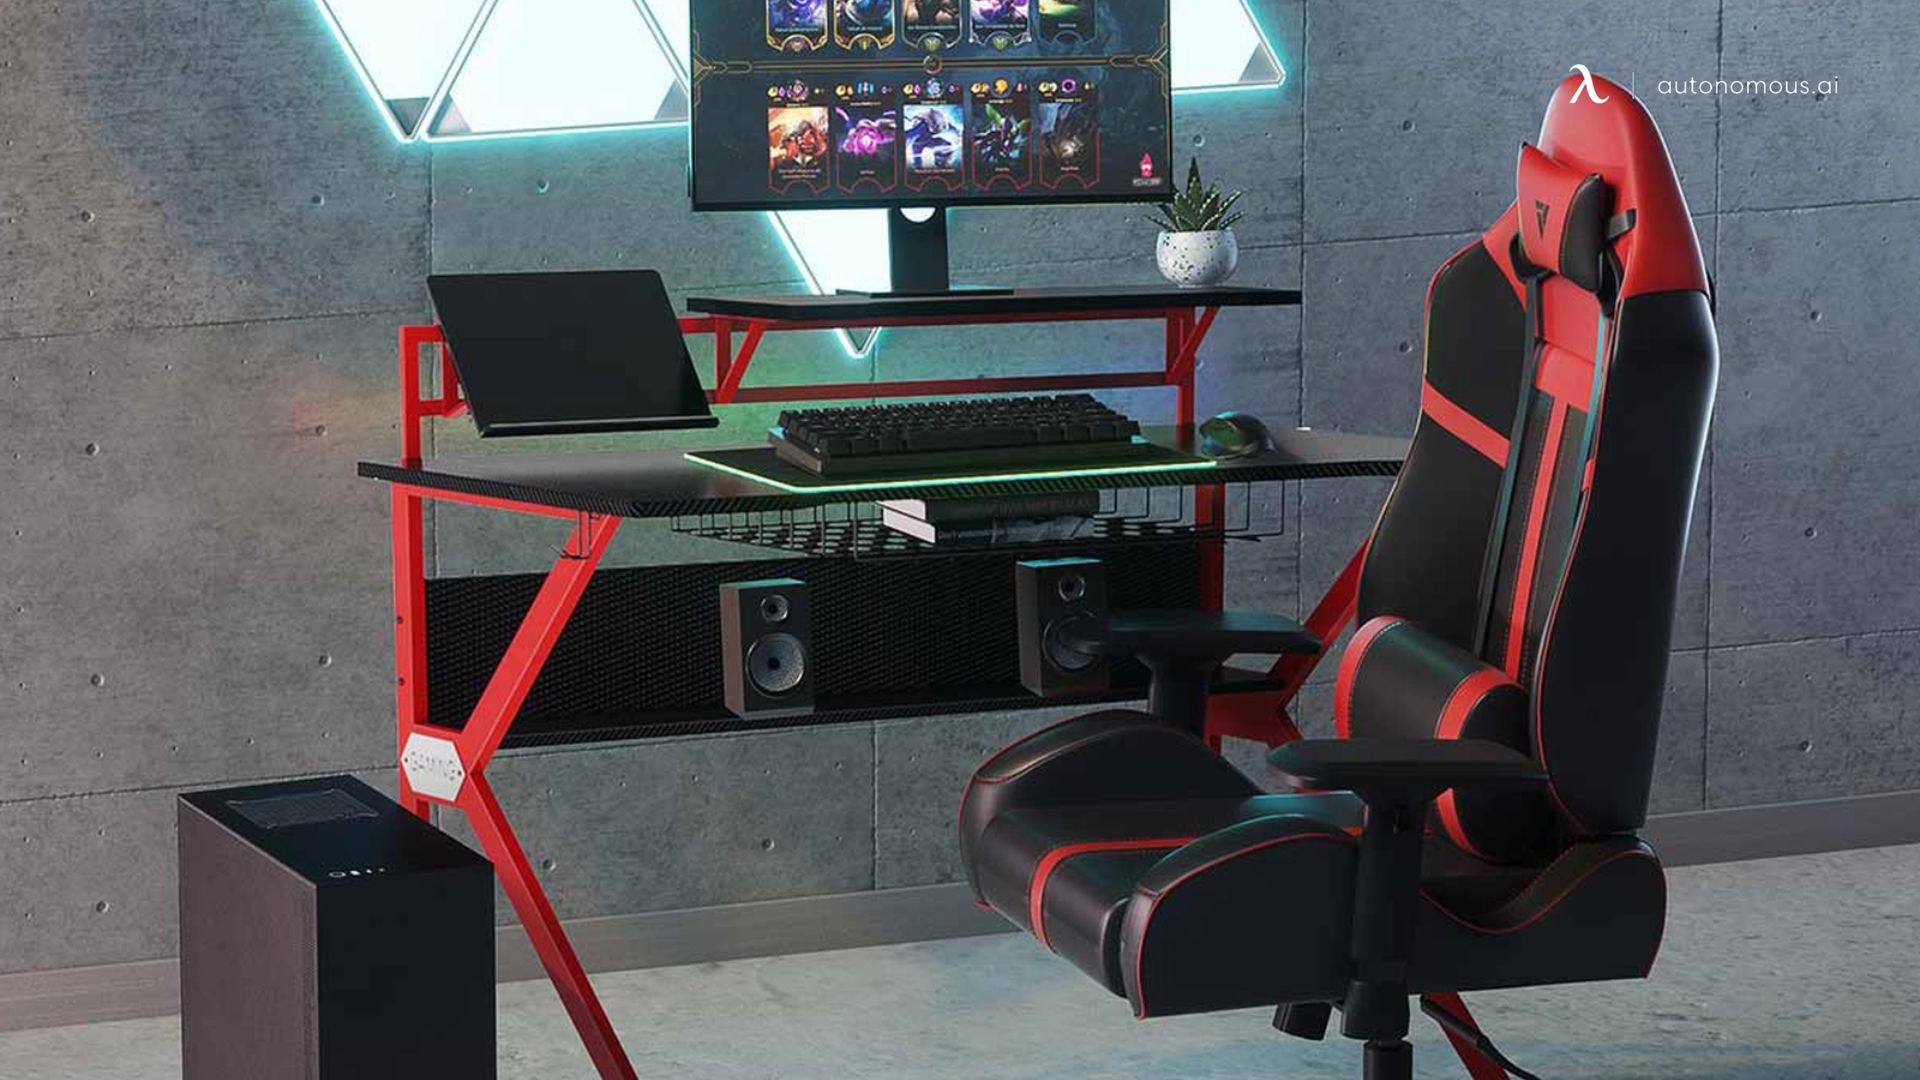 Benzara Compact Gaming Desk